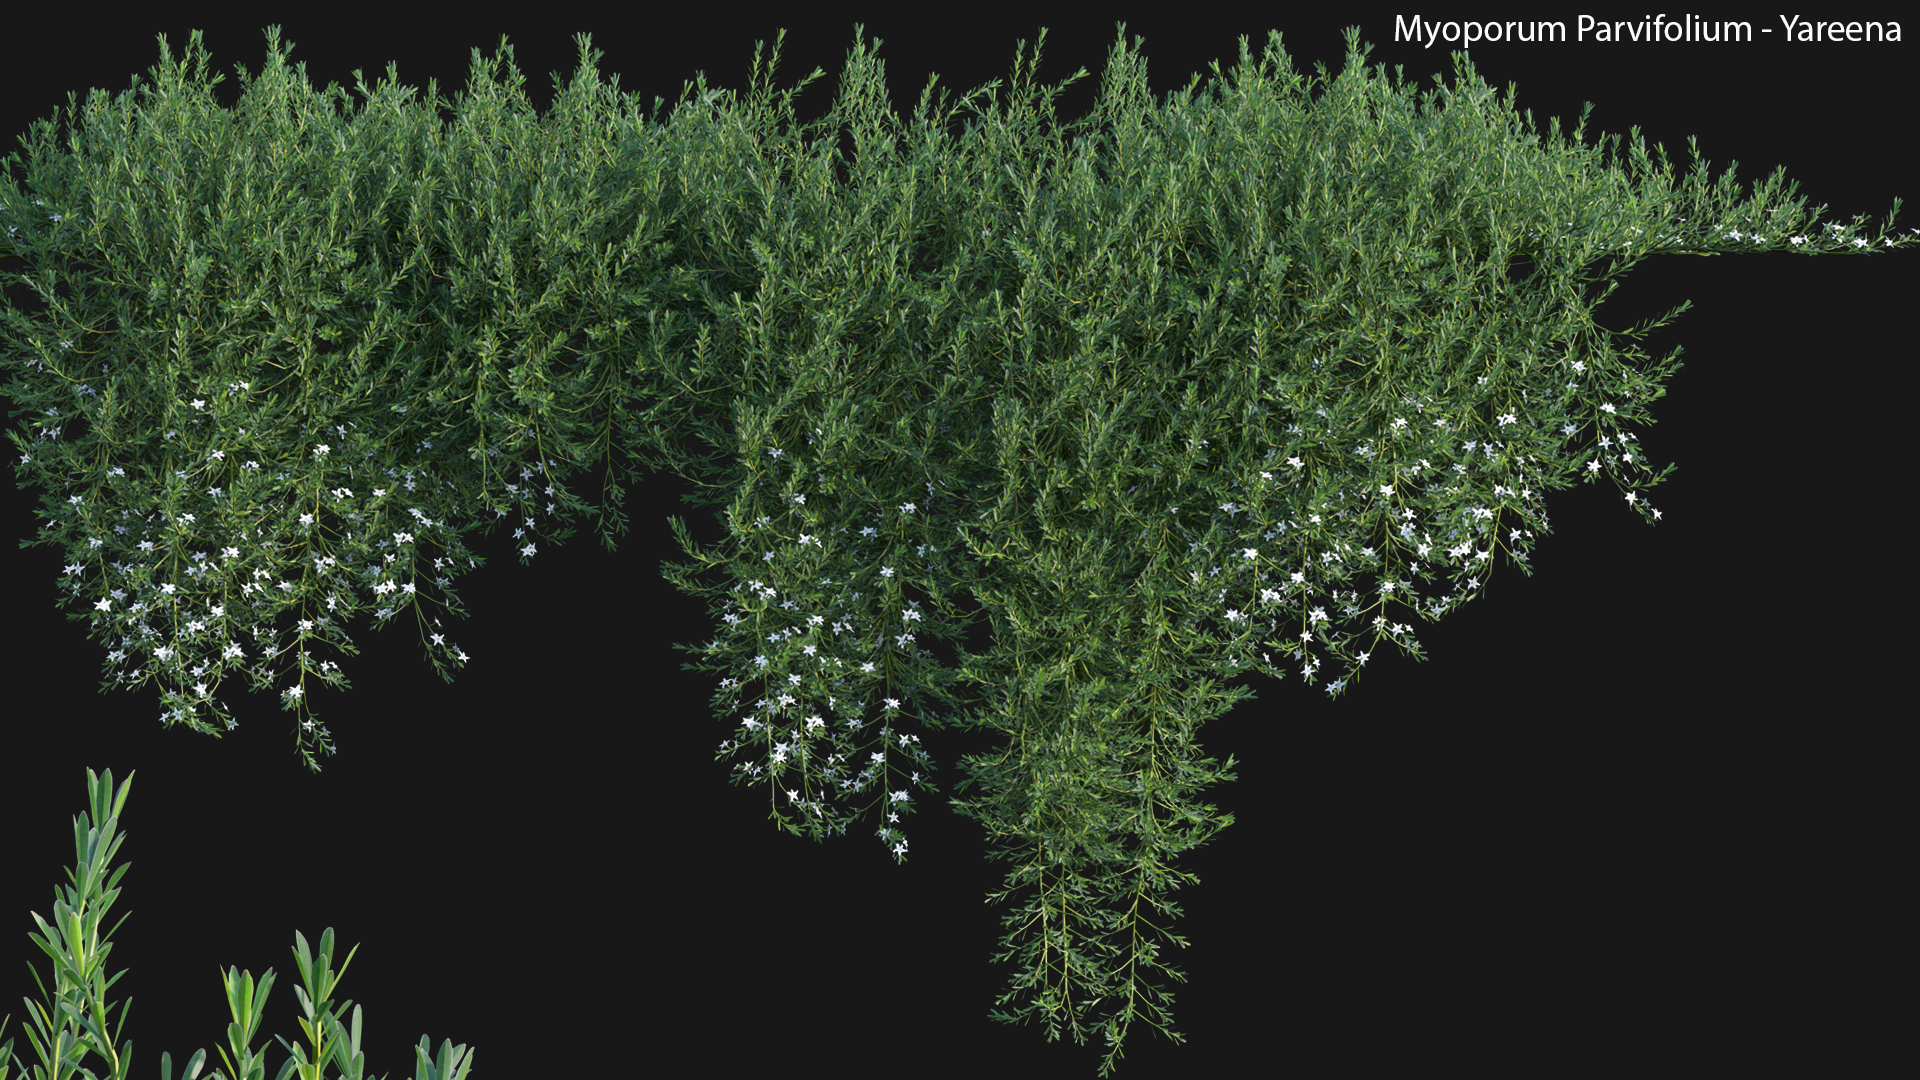 Myoporum Parvifolium - Yareena